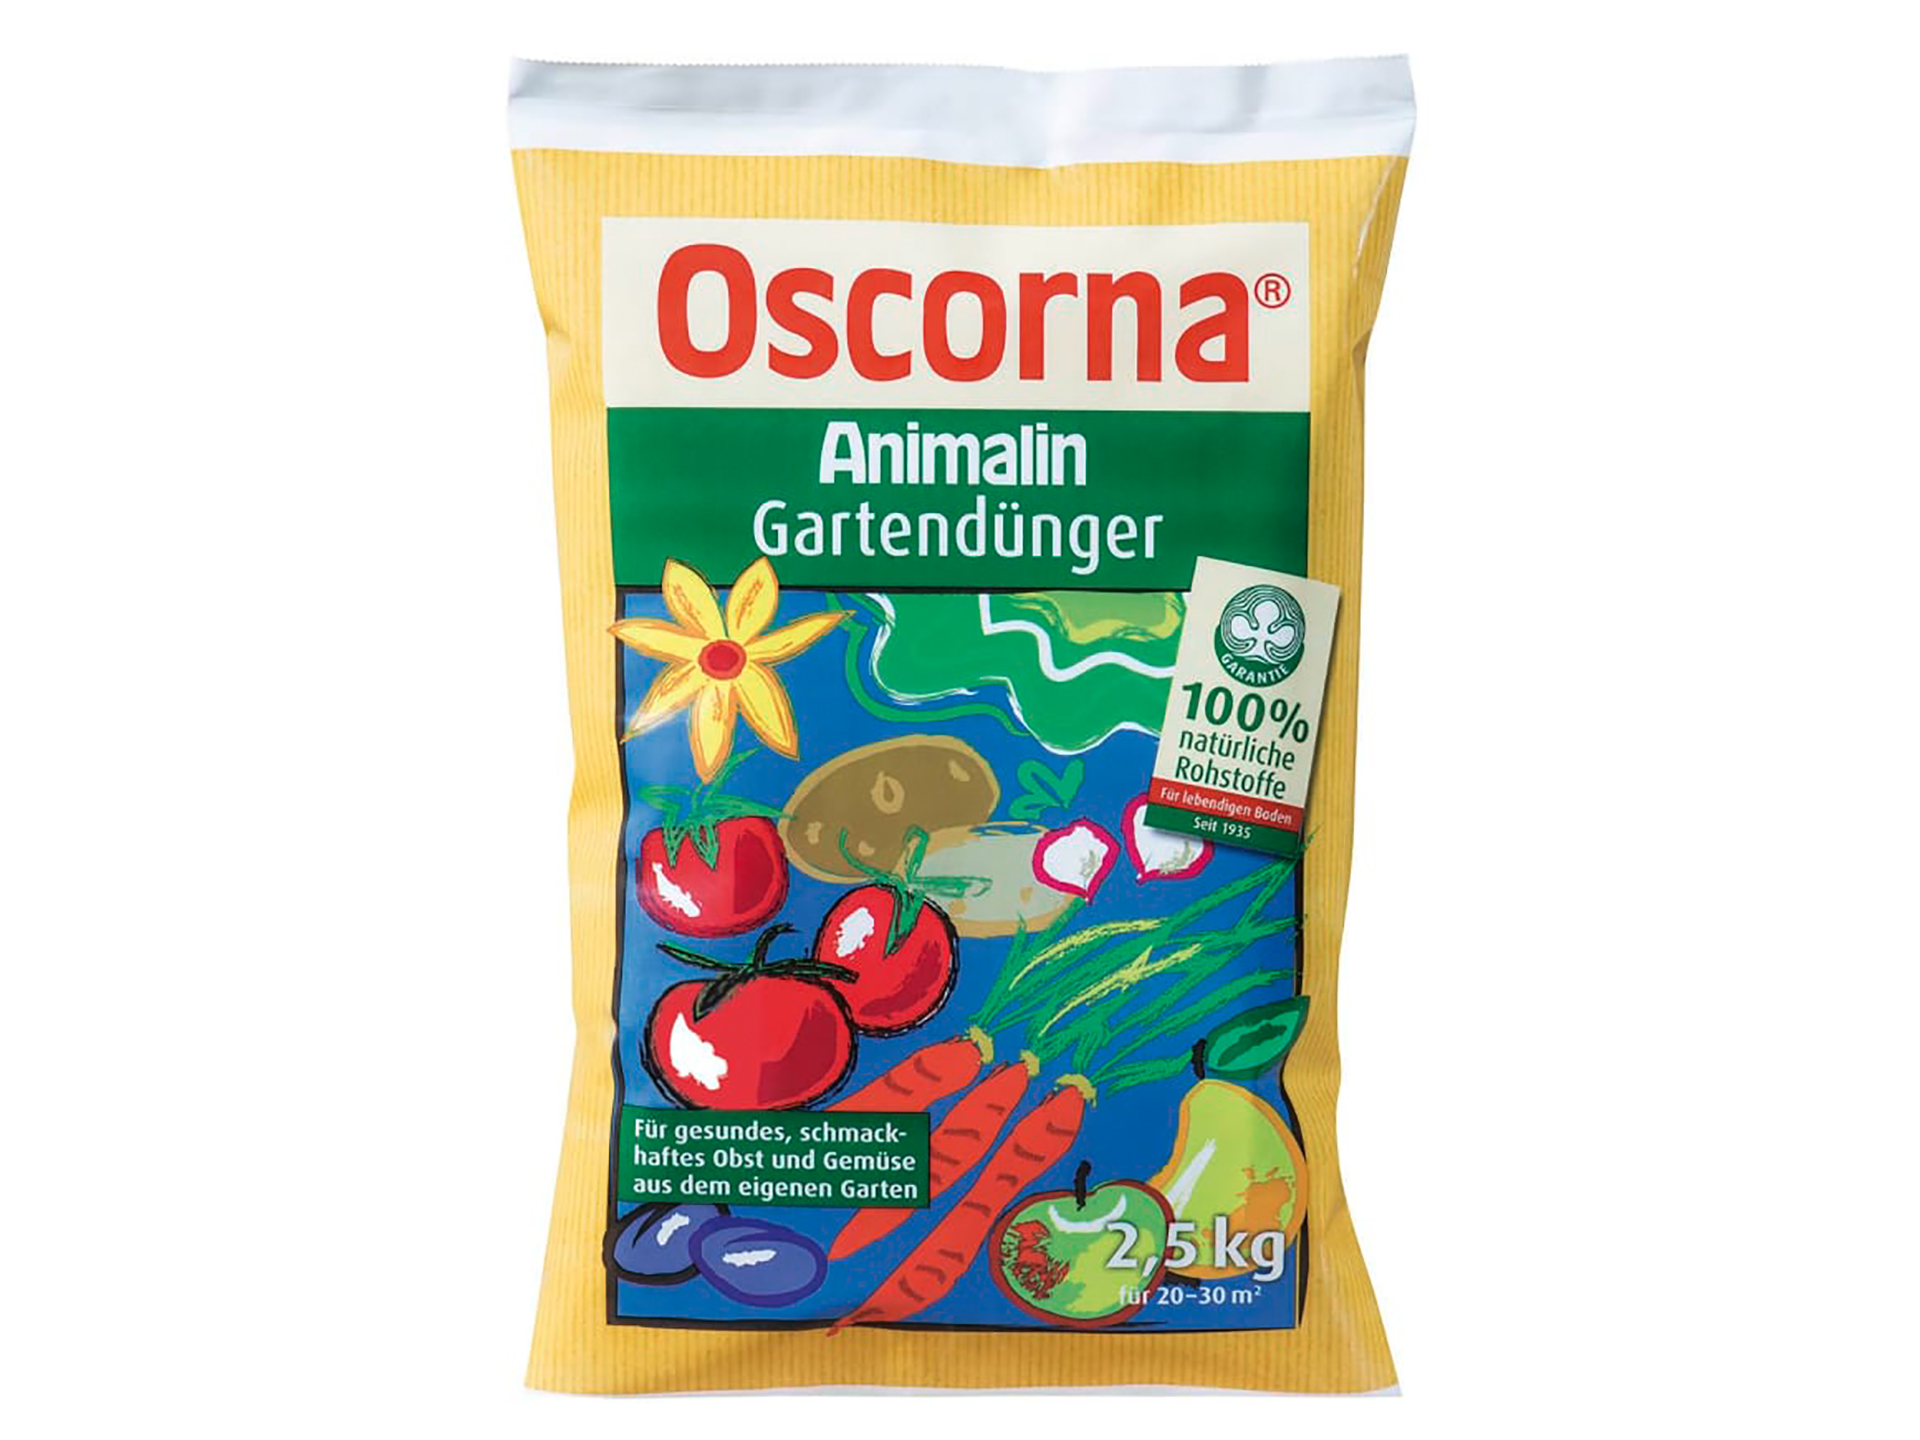 Oscorna Animalin Gartendünger 2,5kg